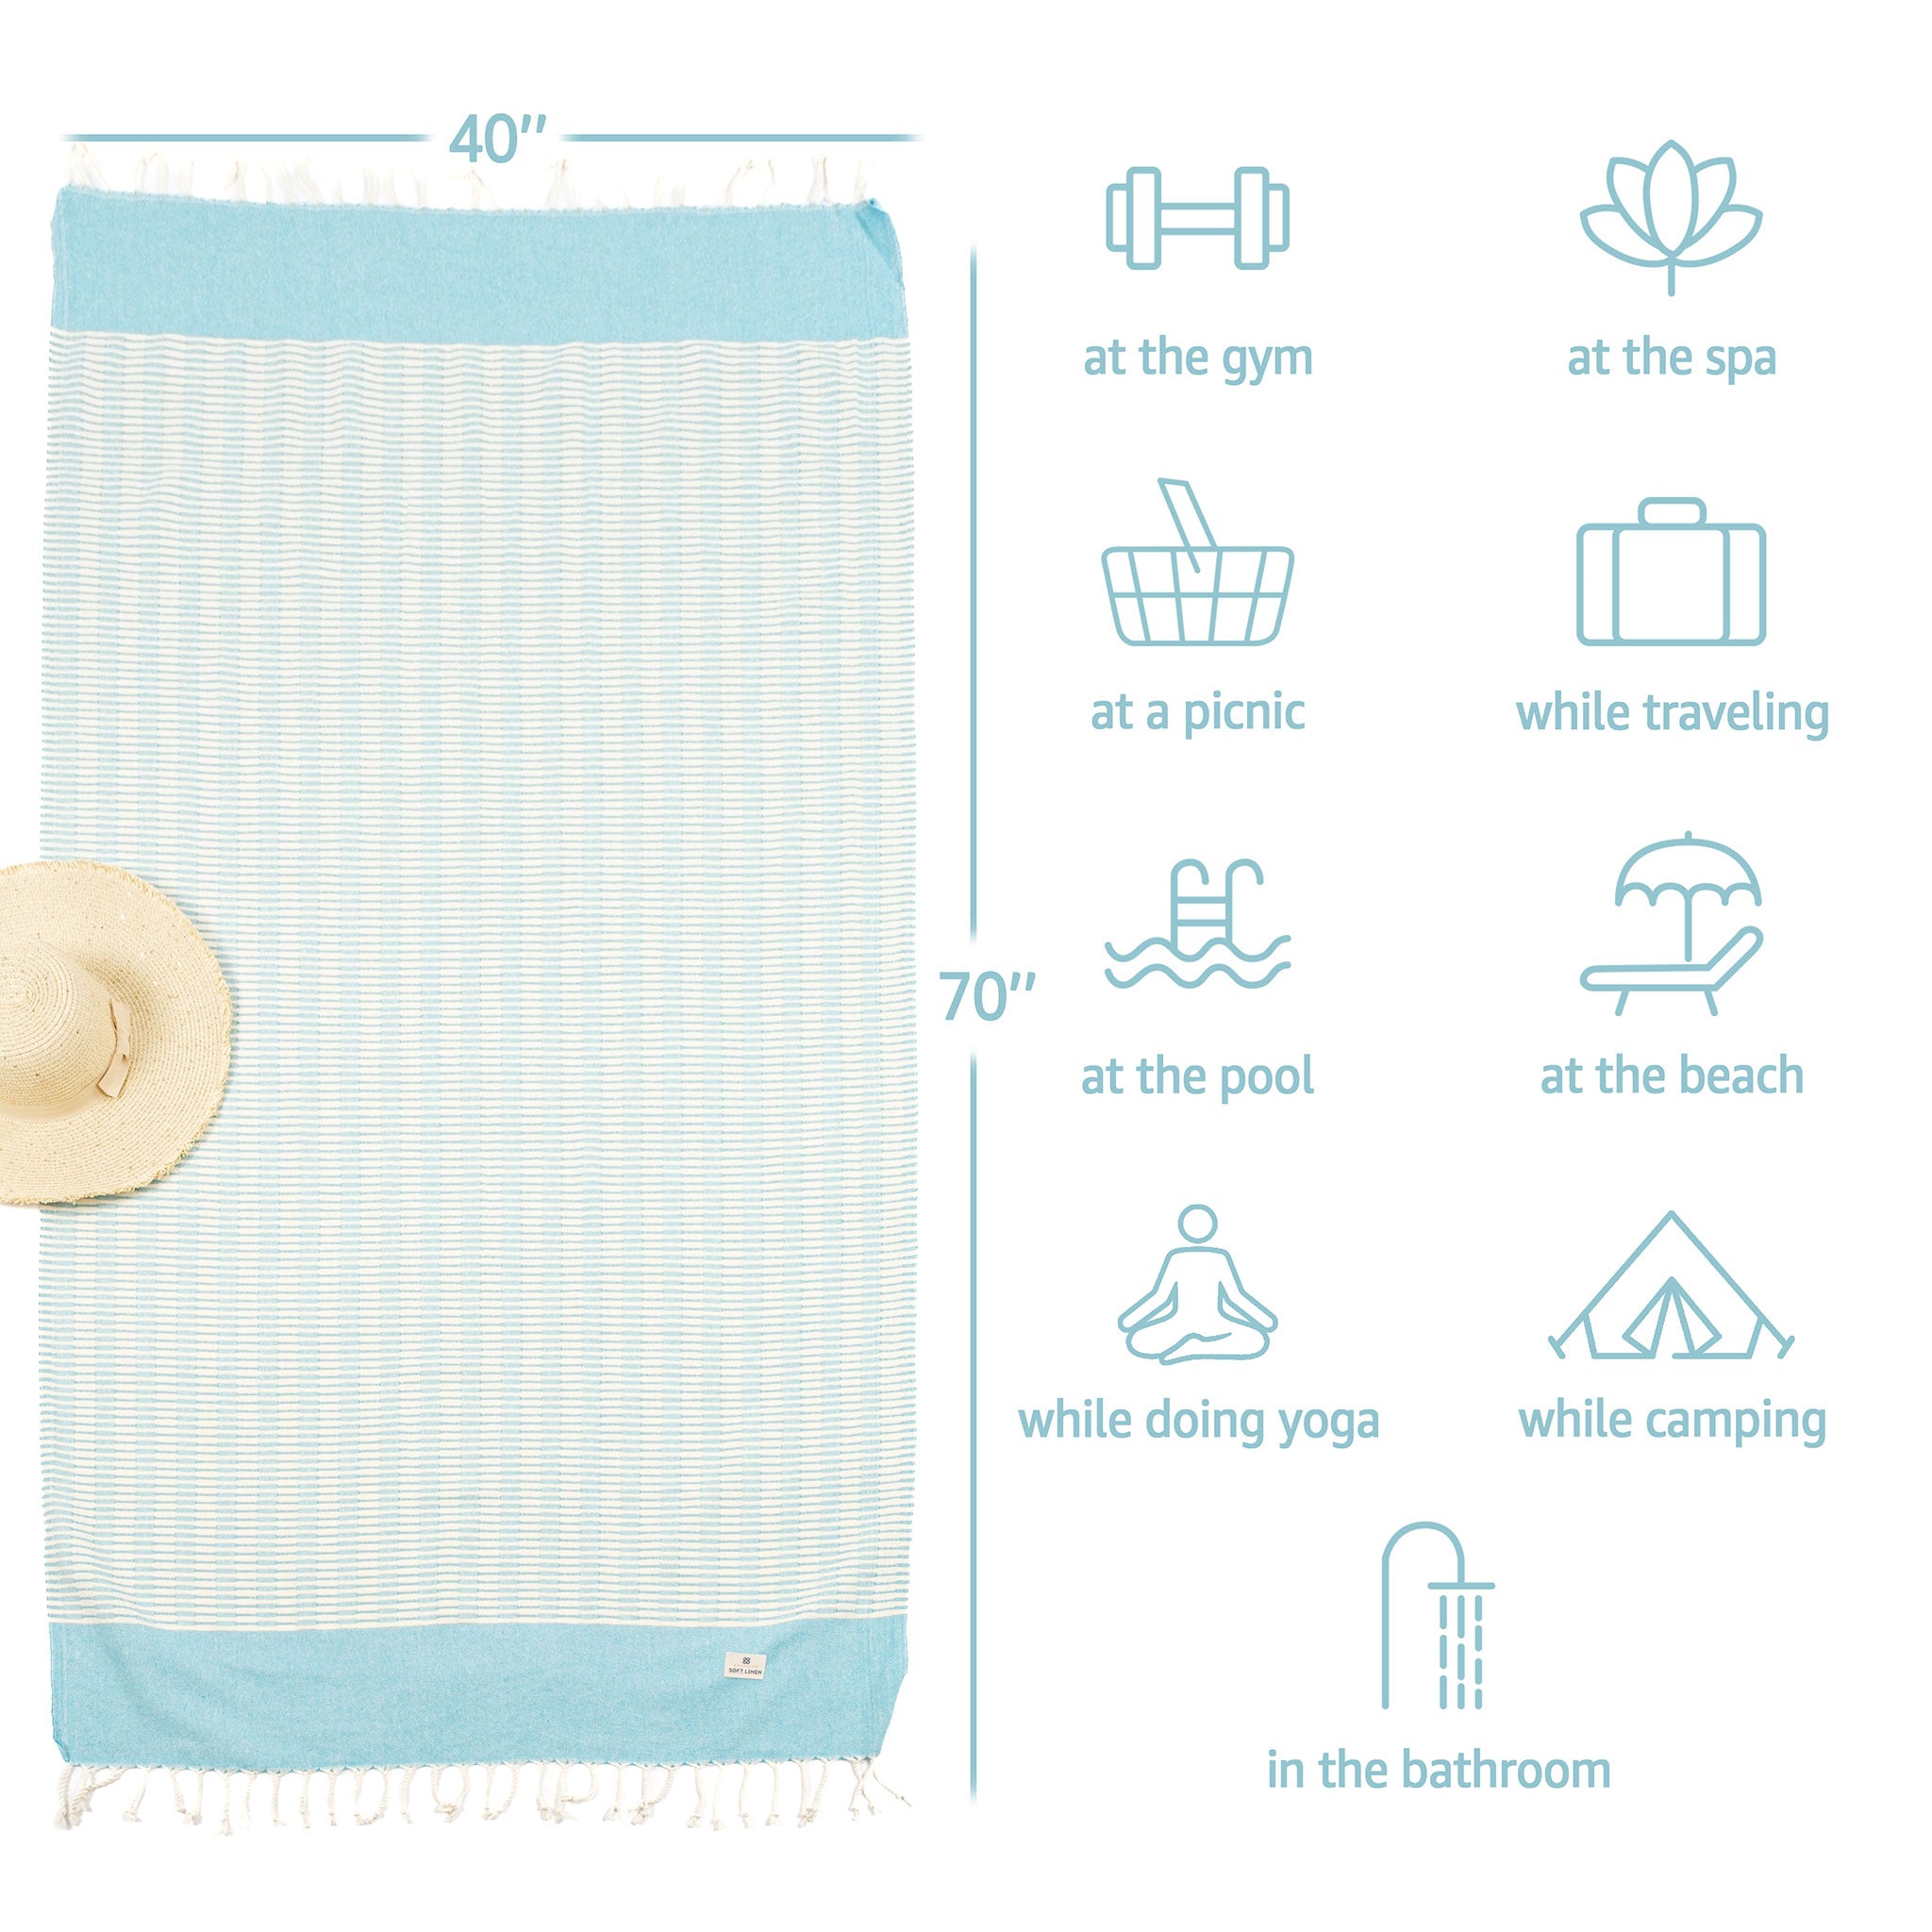 American Soft Linen - 100% Cotton Turkish Peshtemal Towels 40x70 Inches - Turquoise - 4